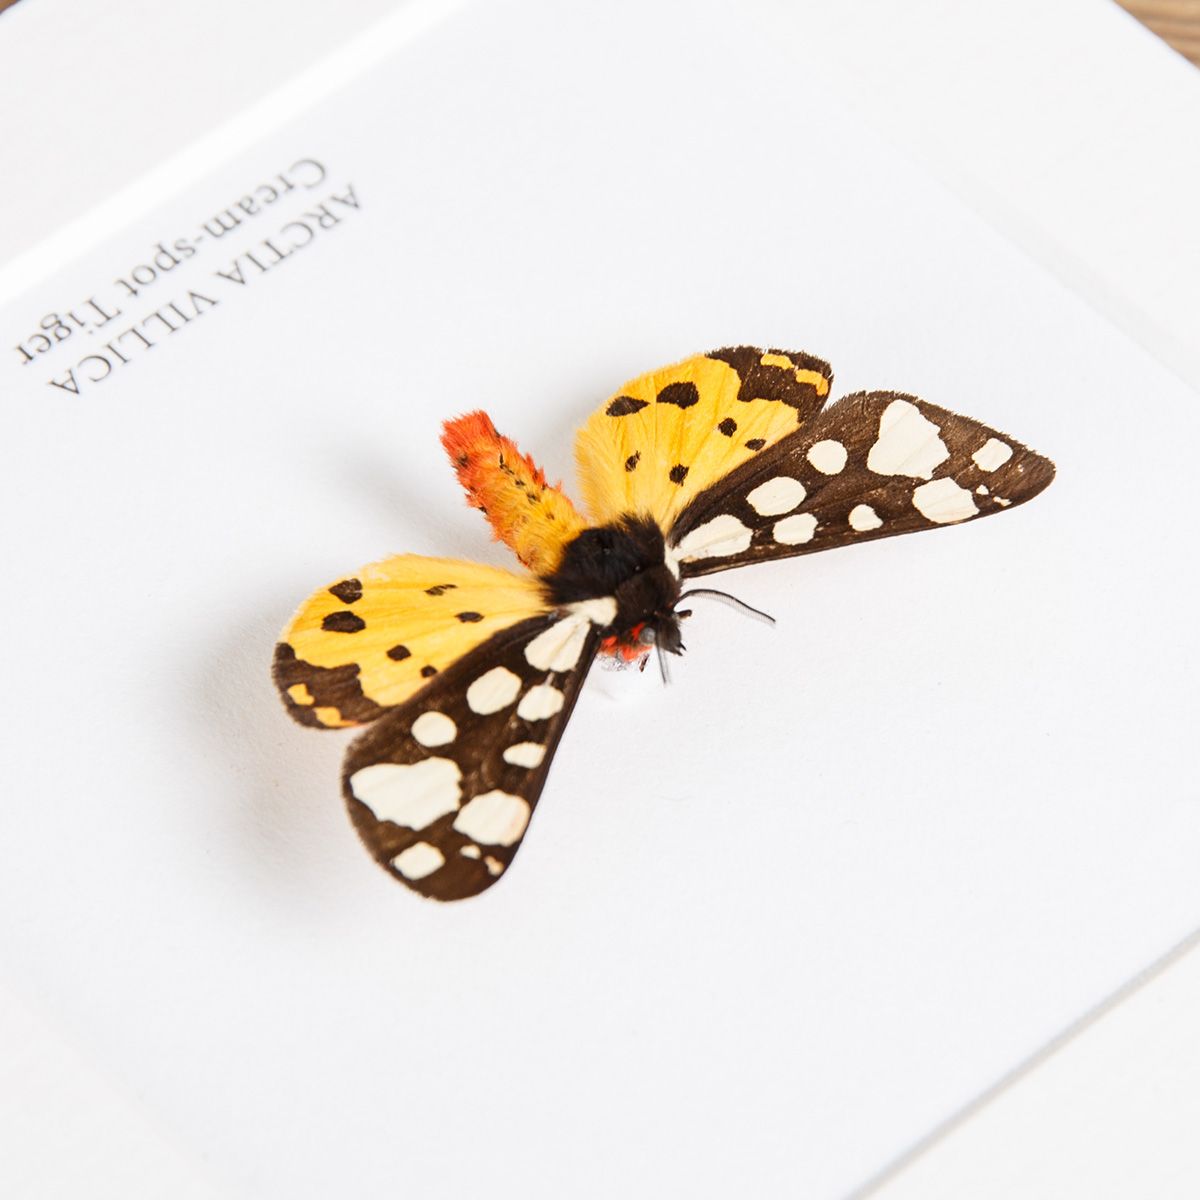 Cream-spot Tiger Moth in Box Frame (Arctia villica)